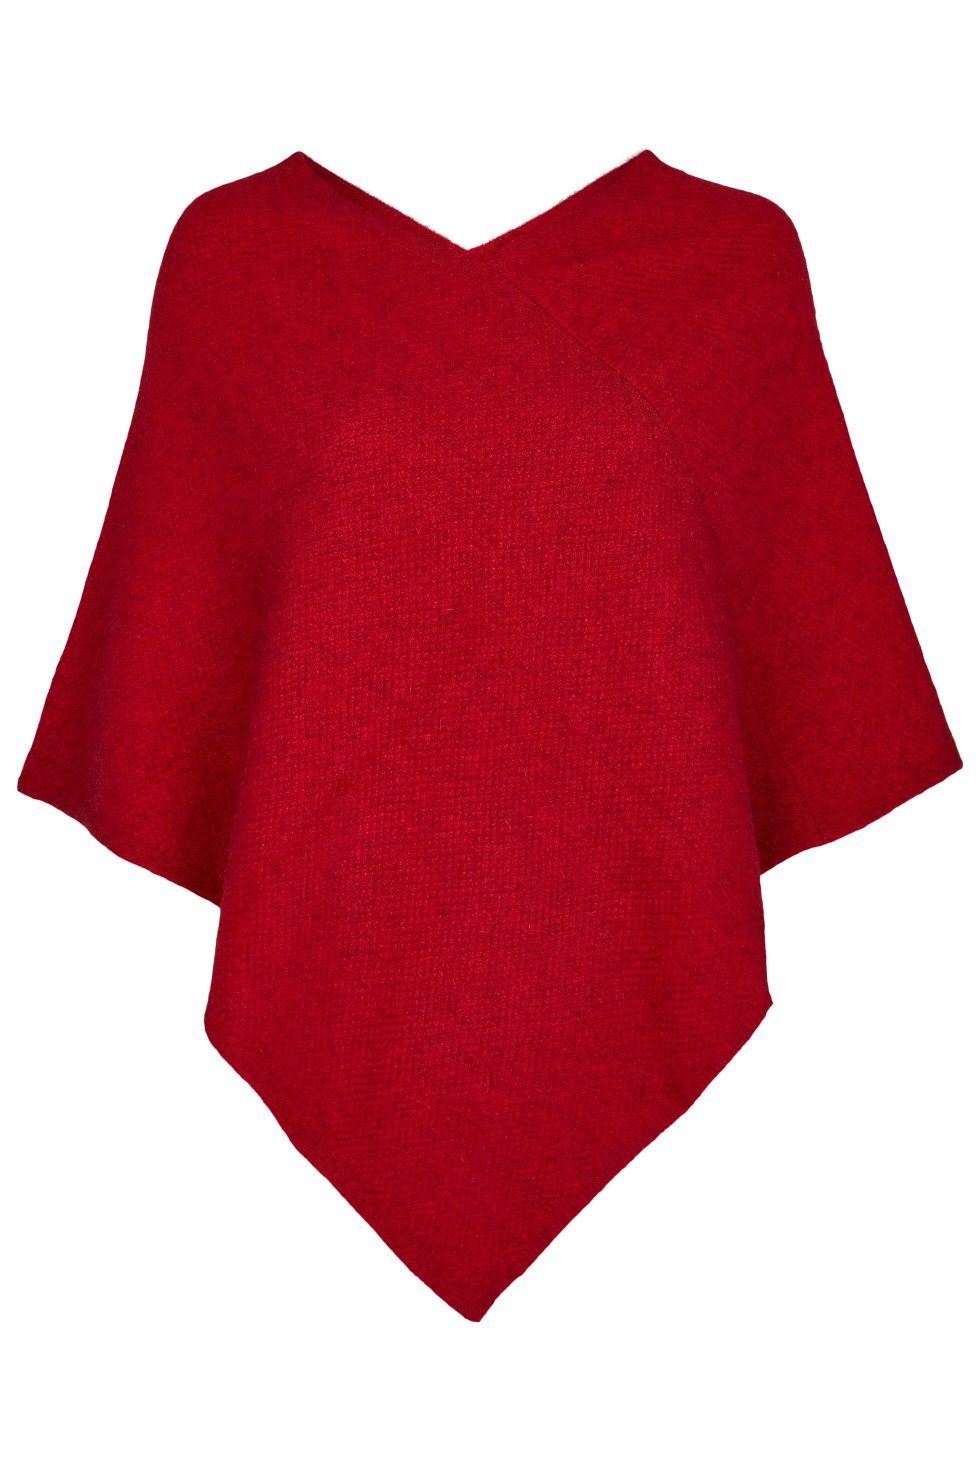 Koru Merino Possumhaarfaser Poncho Unifarben aus Knitwear der Koru Strickponcho Possum red